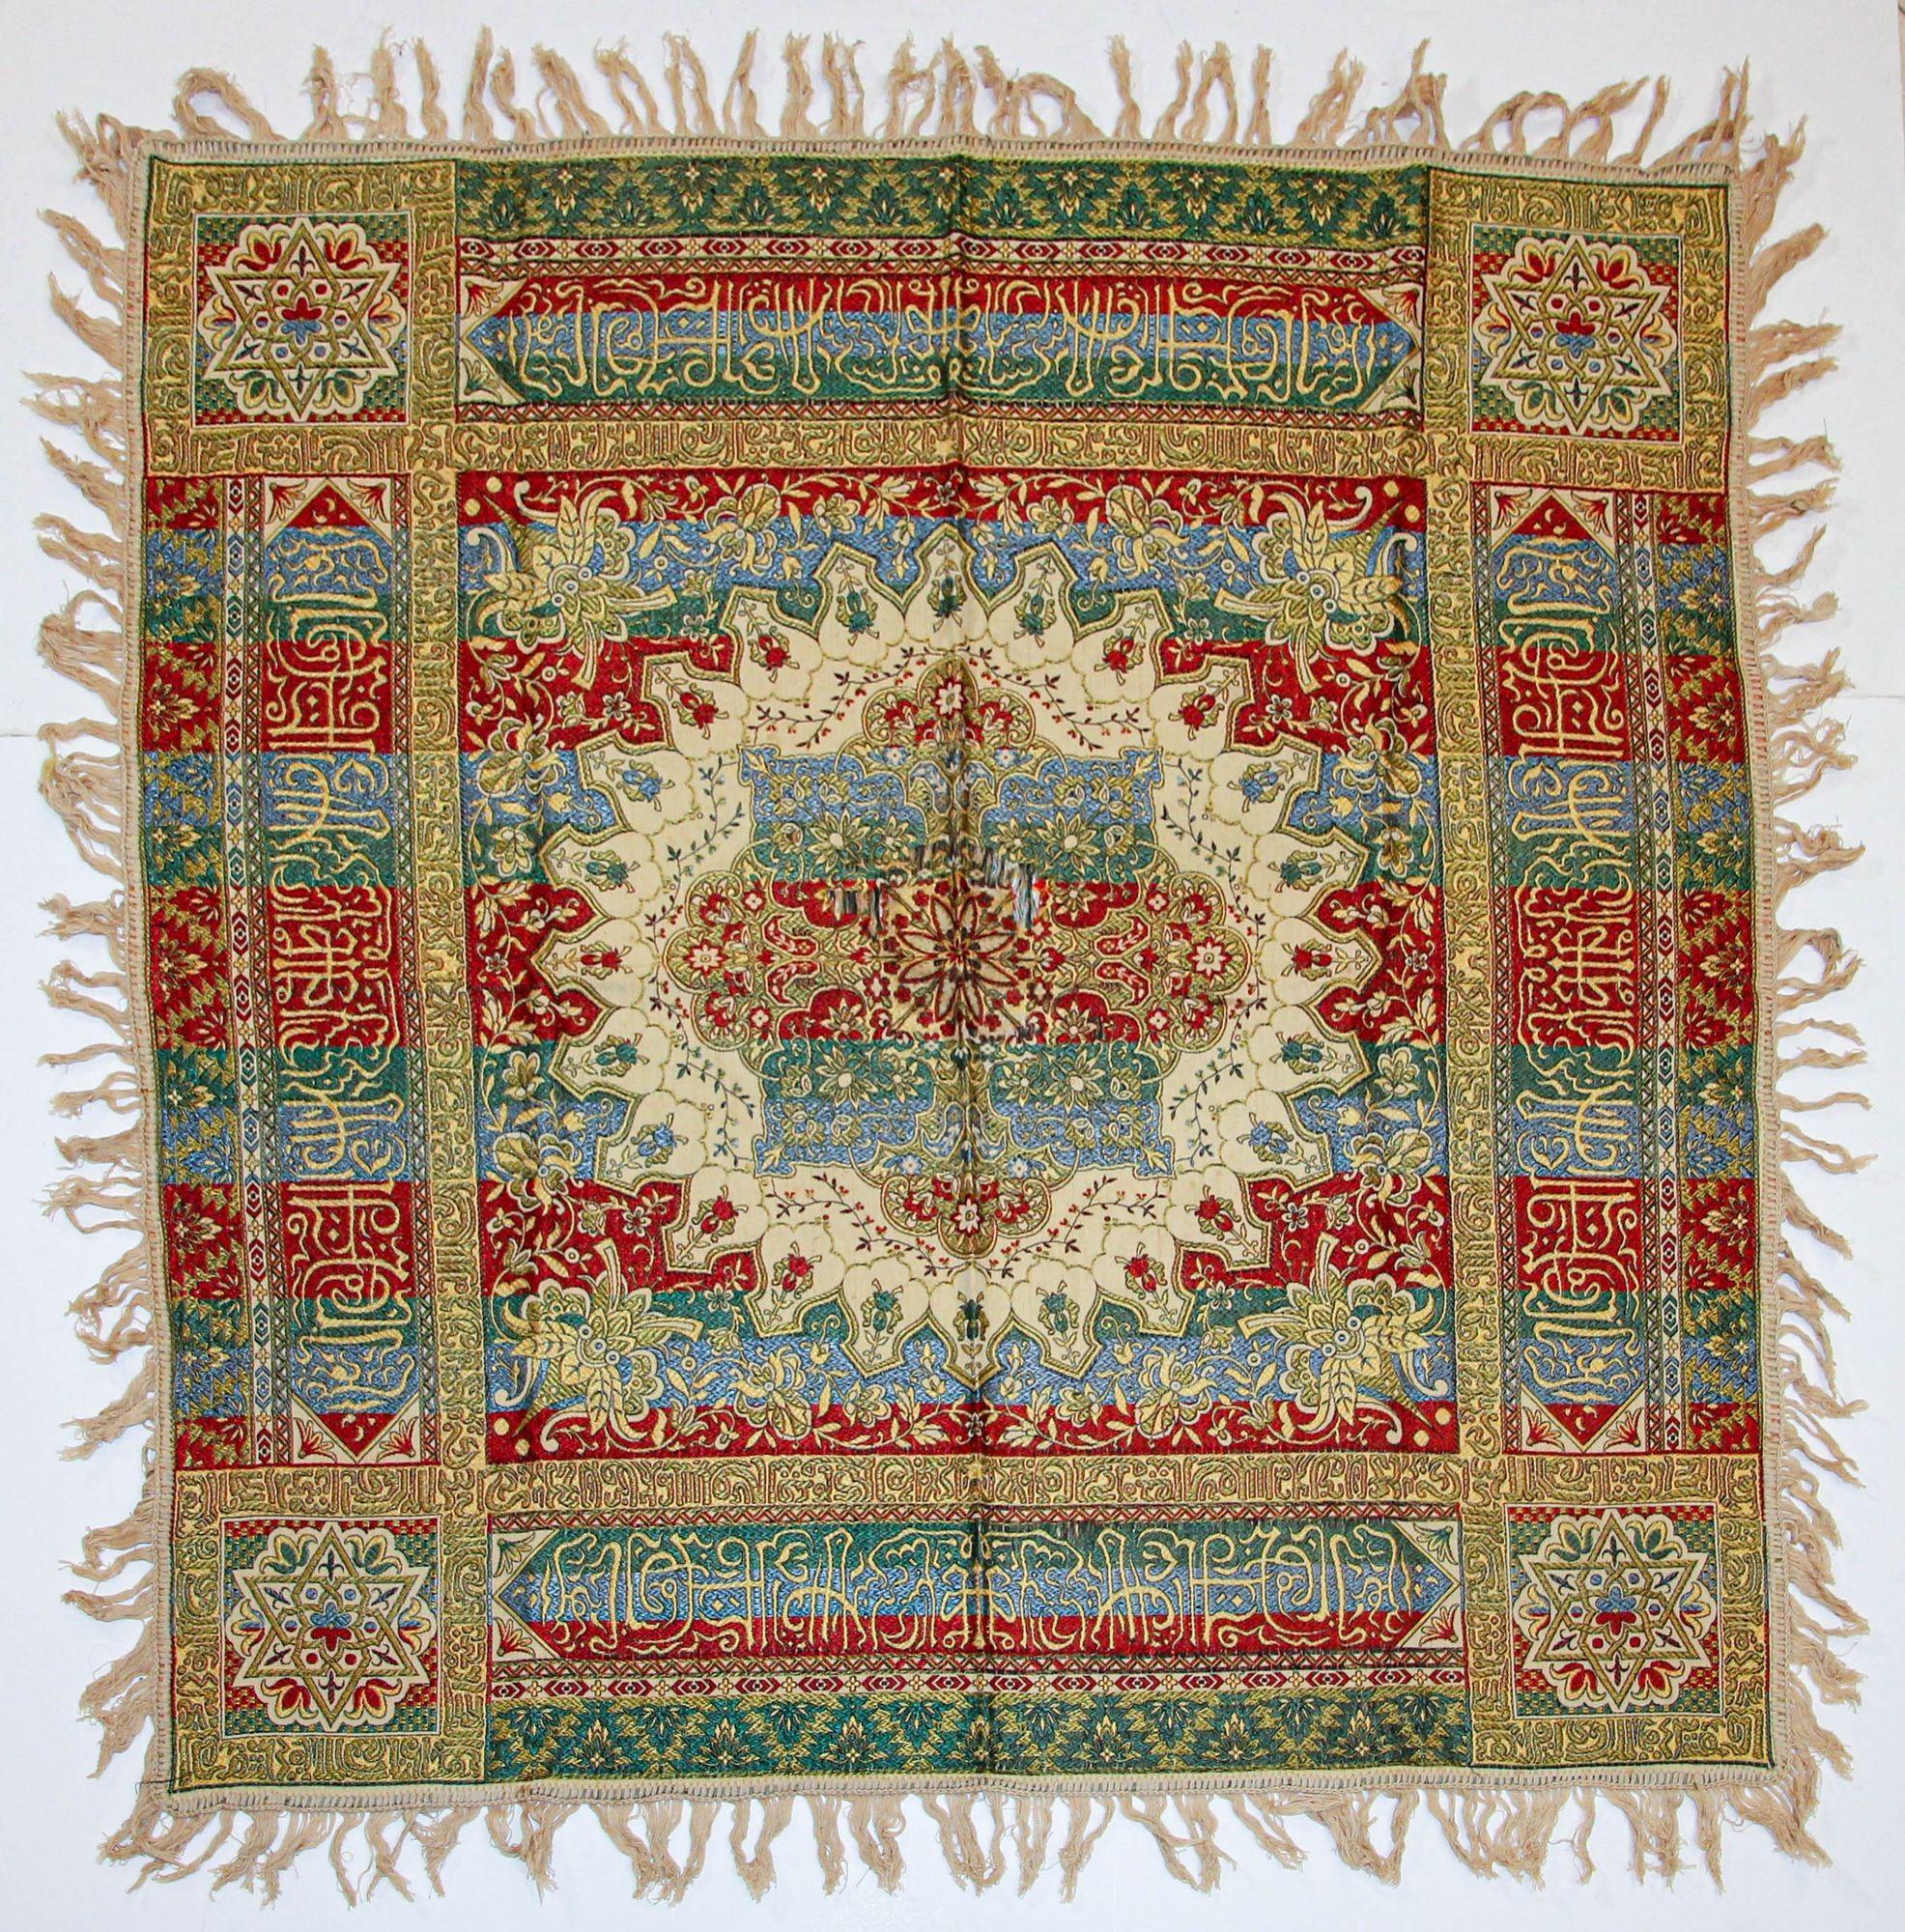 Fabric 1920s Antique Granada Spain Moorish Islamic Tapestry with Arabic Writing